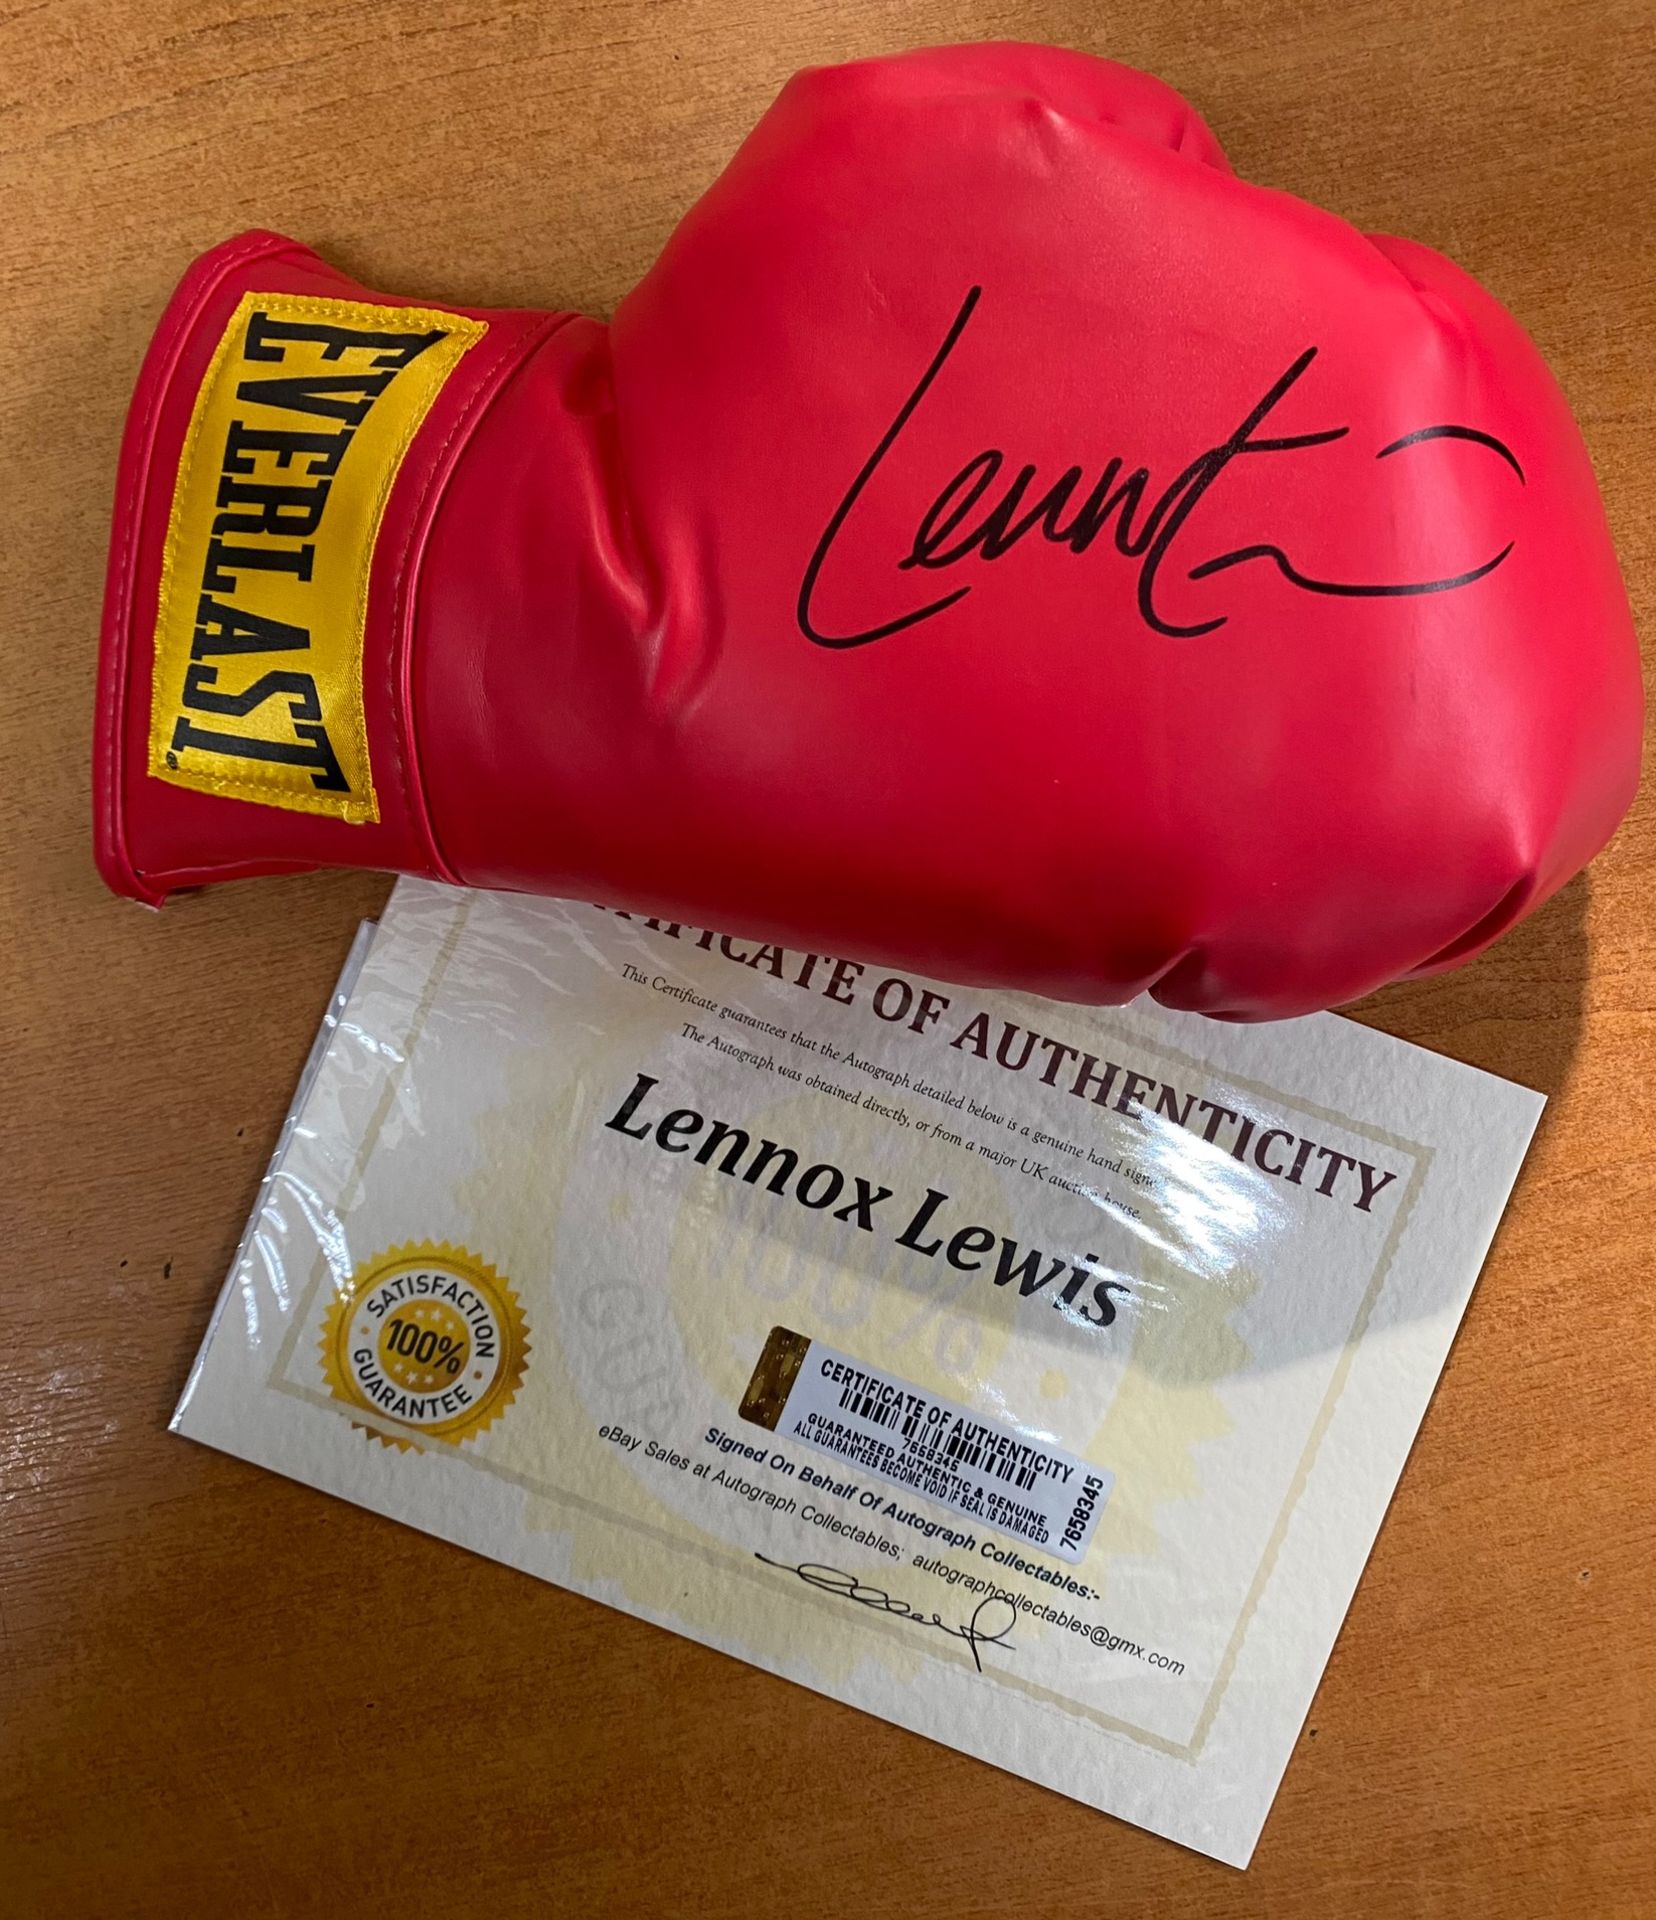 Lennox Lewis Signed Boxing Glove - Image 2 of 3